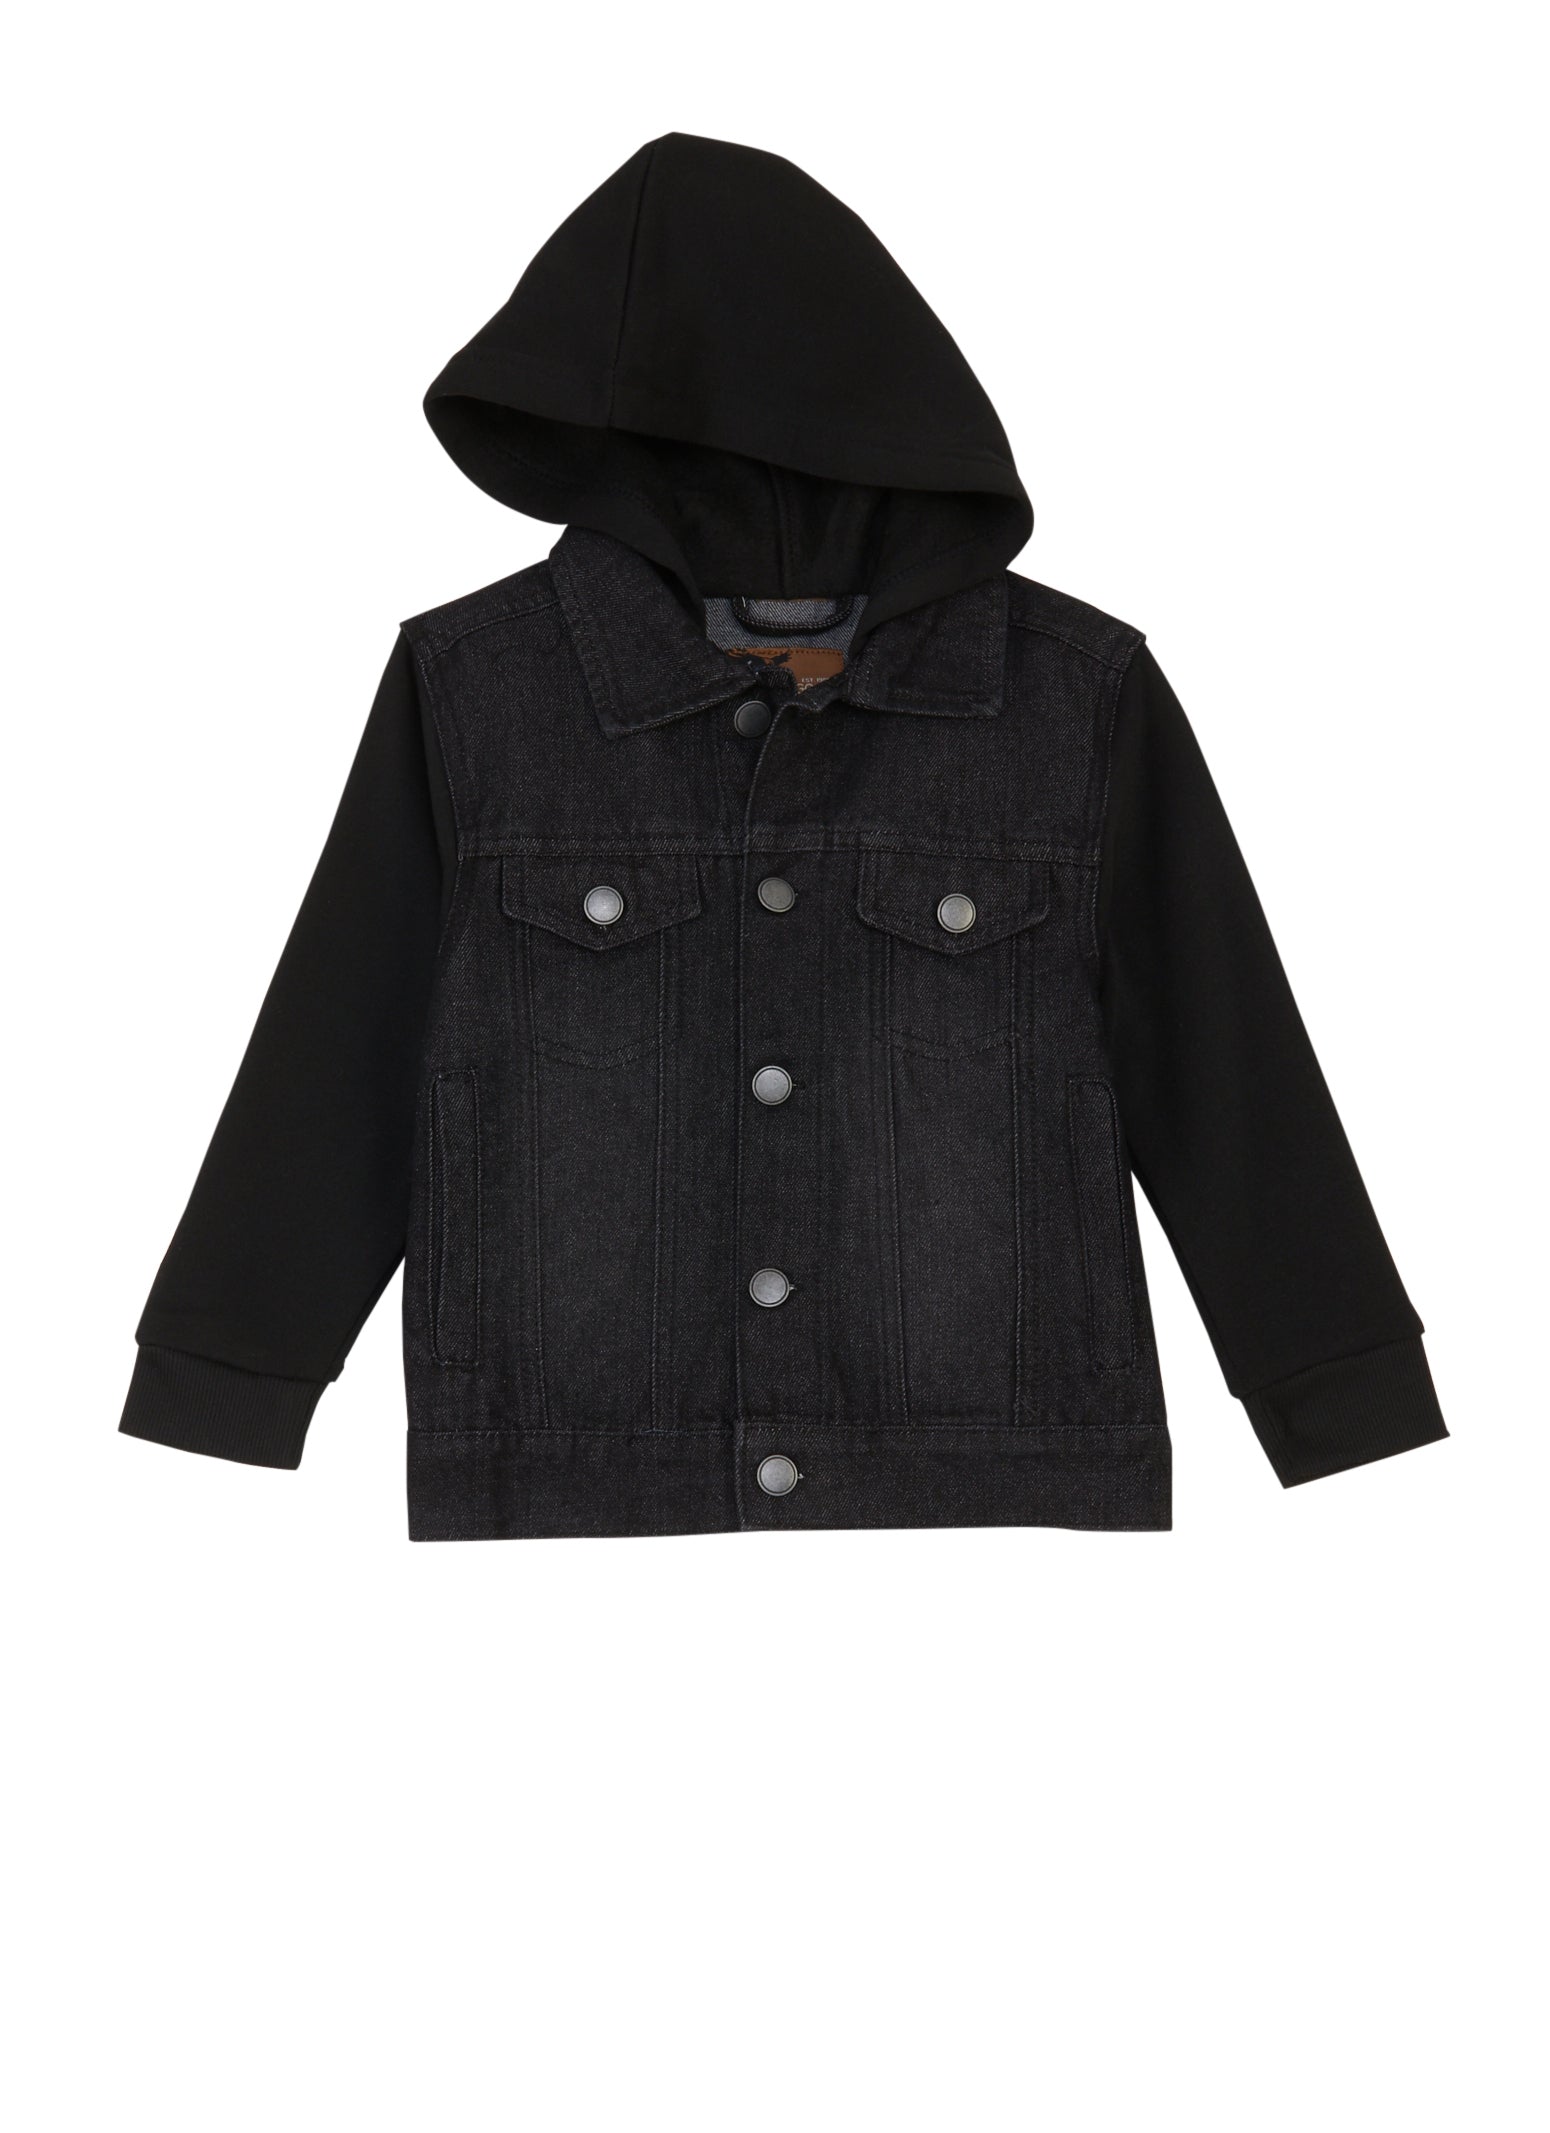 Buy Pepe Jeans Boys Black Solid Biker Jacket - Jackets for Boys 2221579 |  Myntra